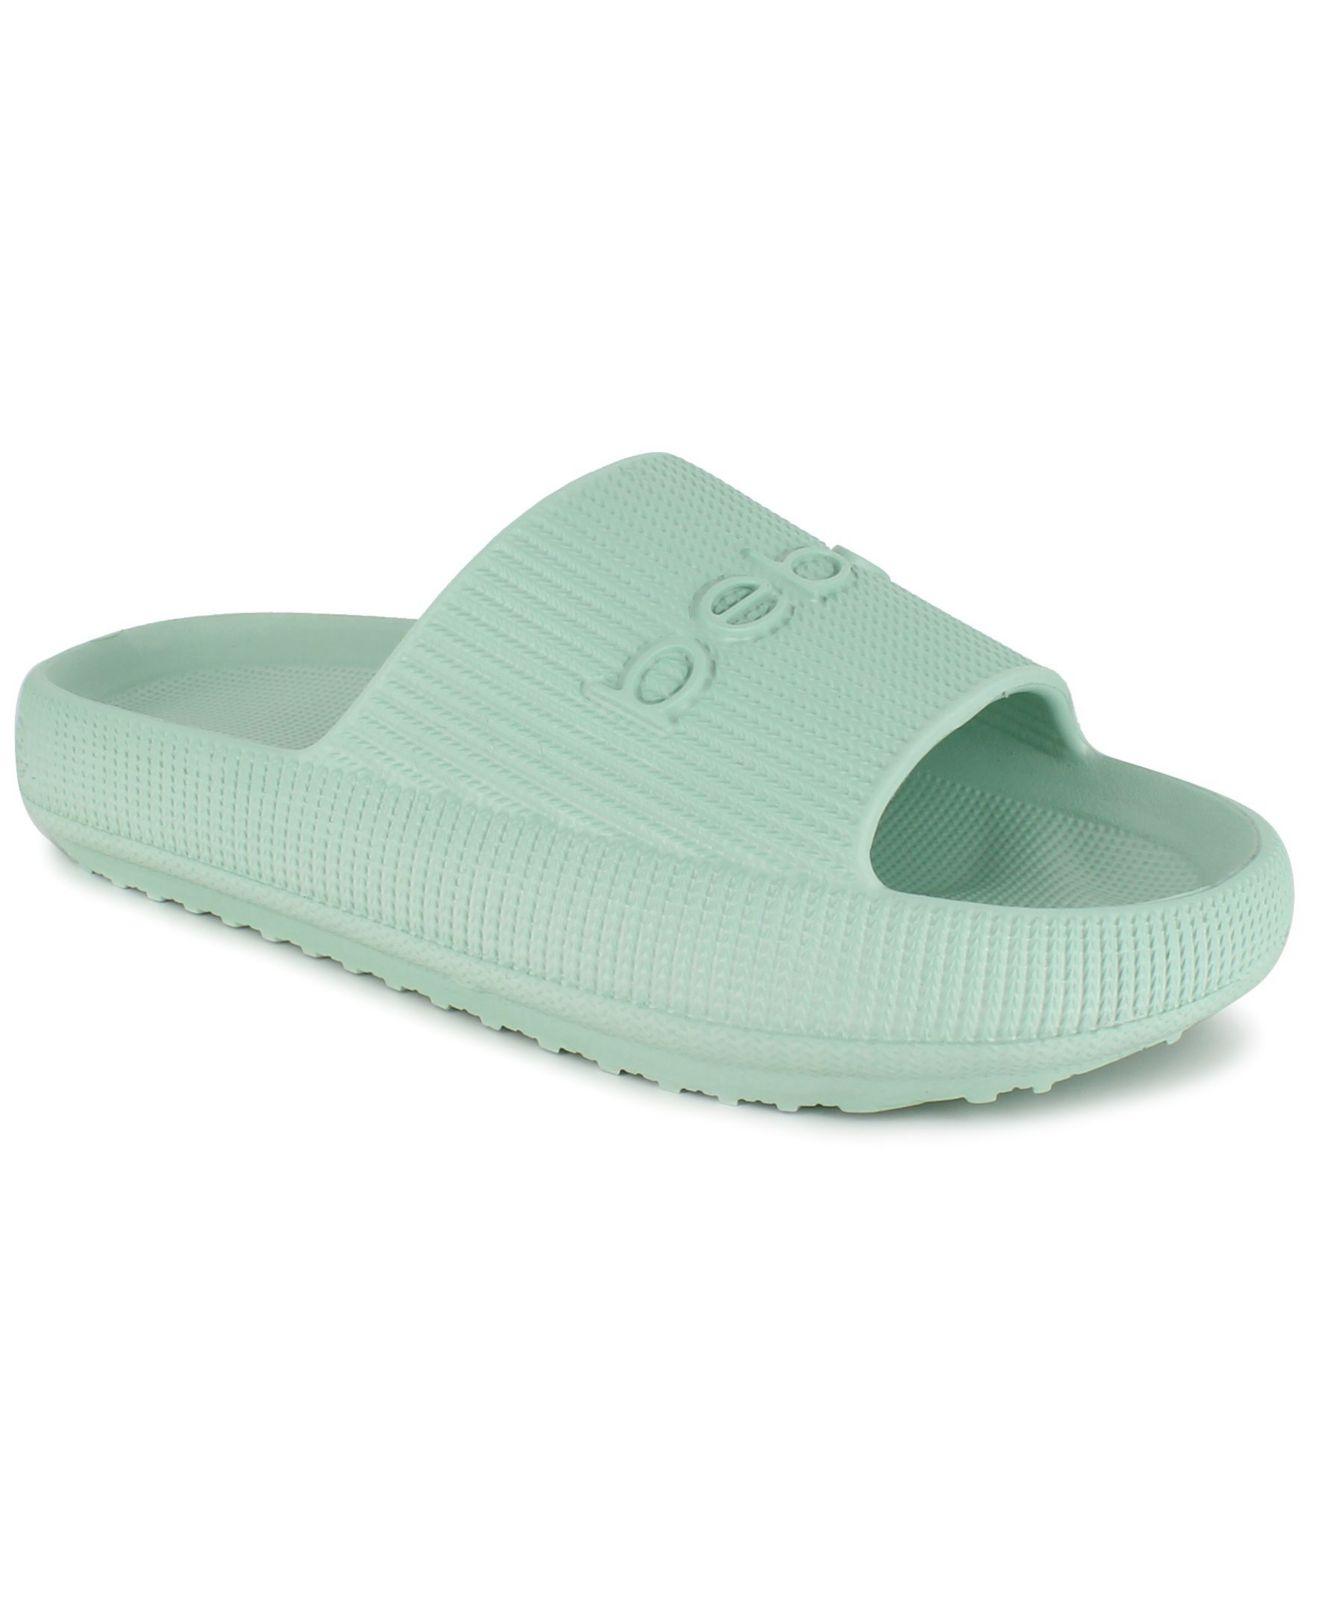 Bebe Synthetic Malaga Pool Slide Flat Sandals in Green | Lyst